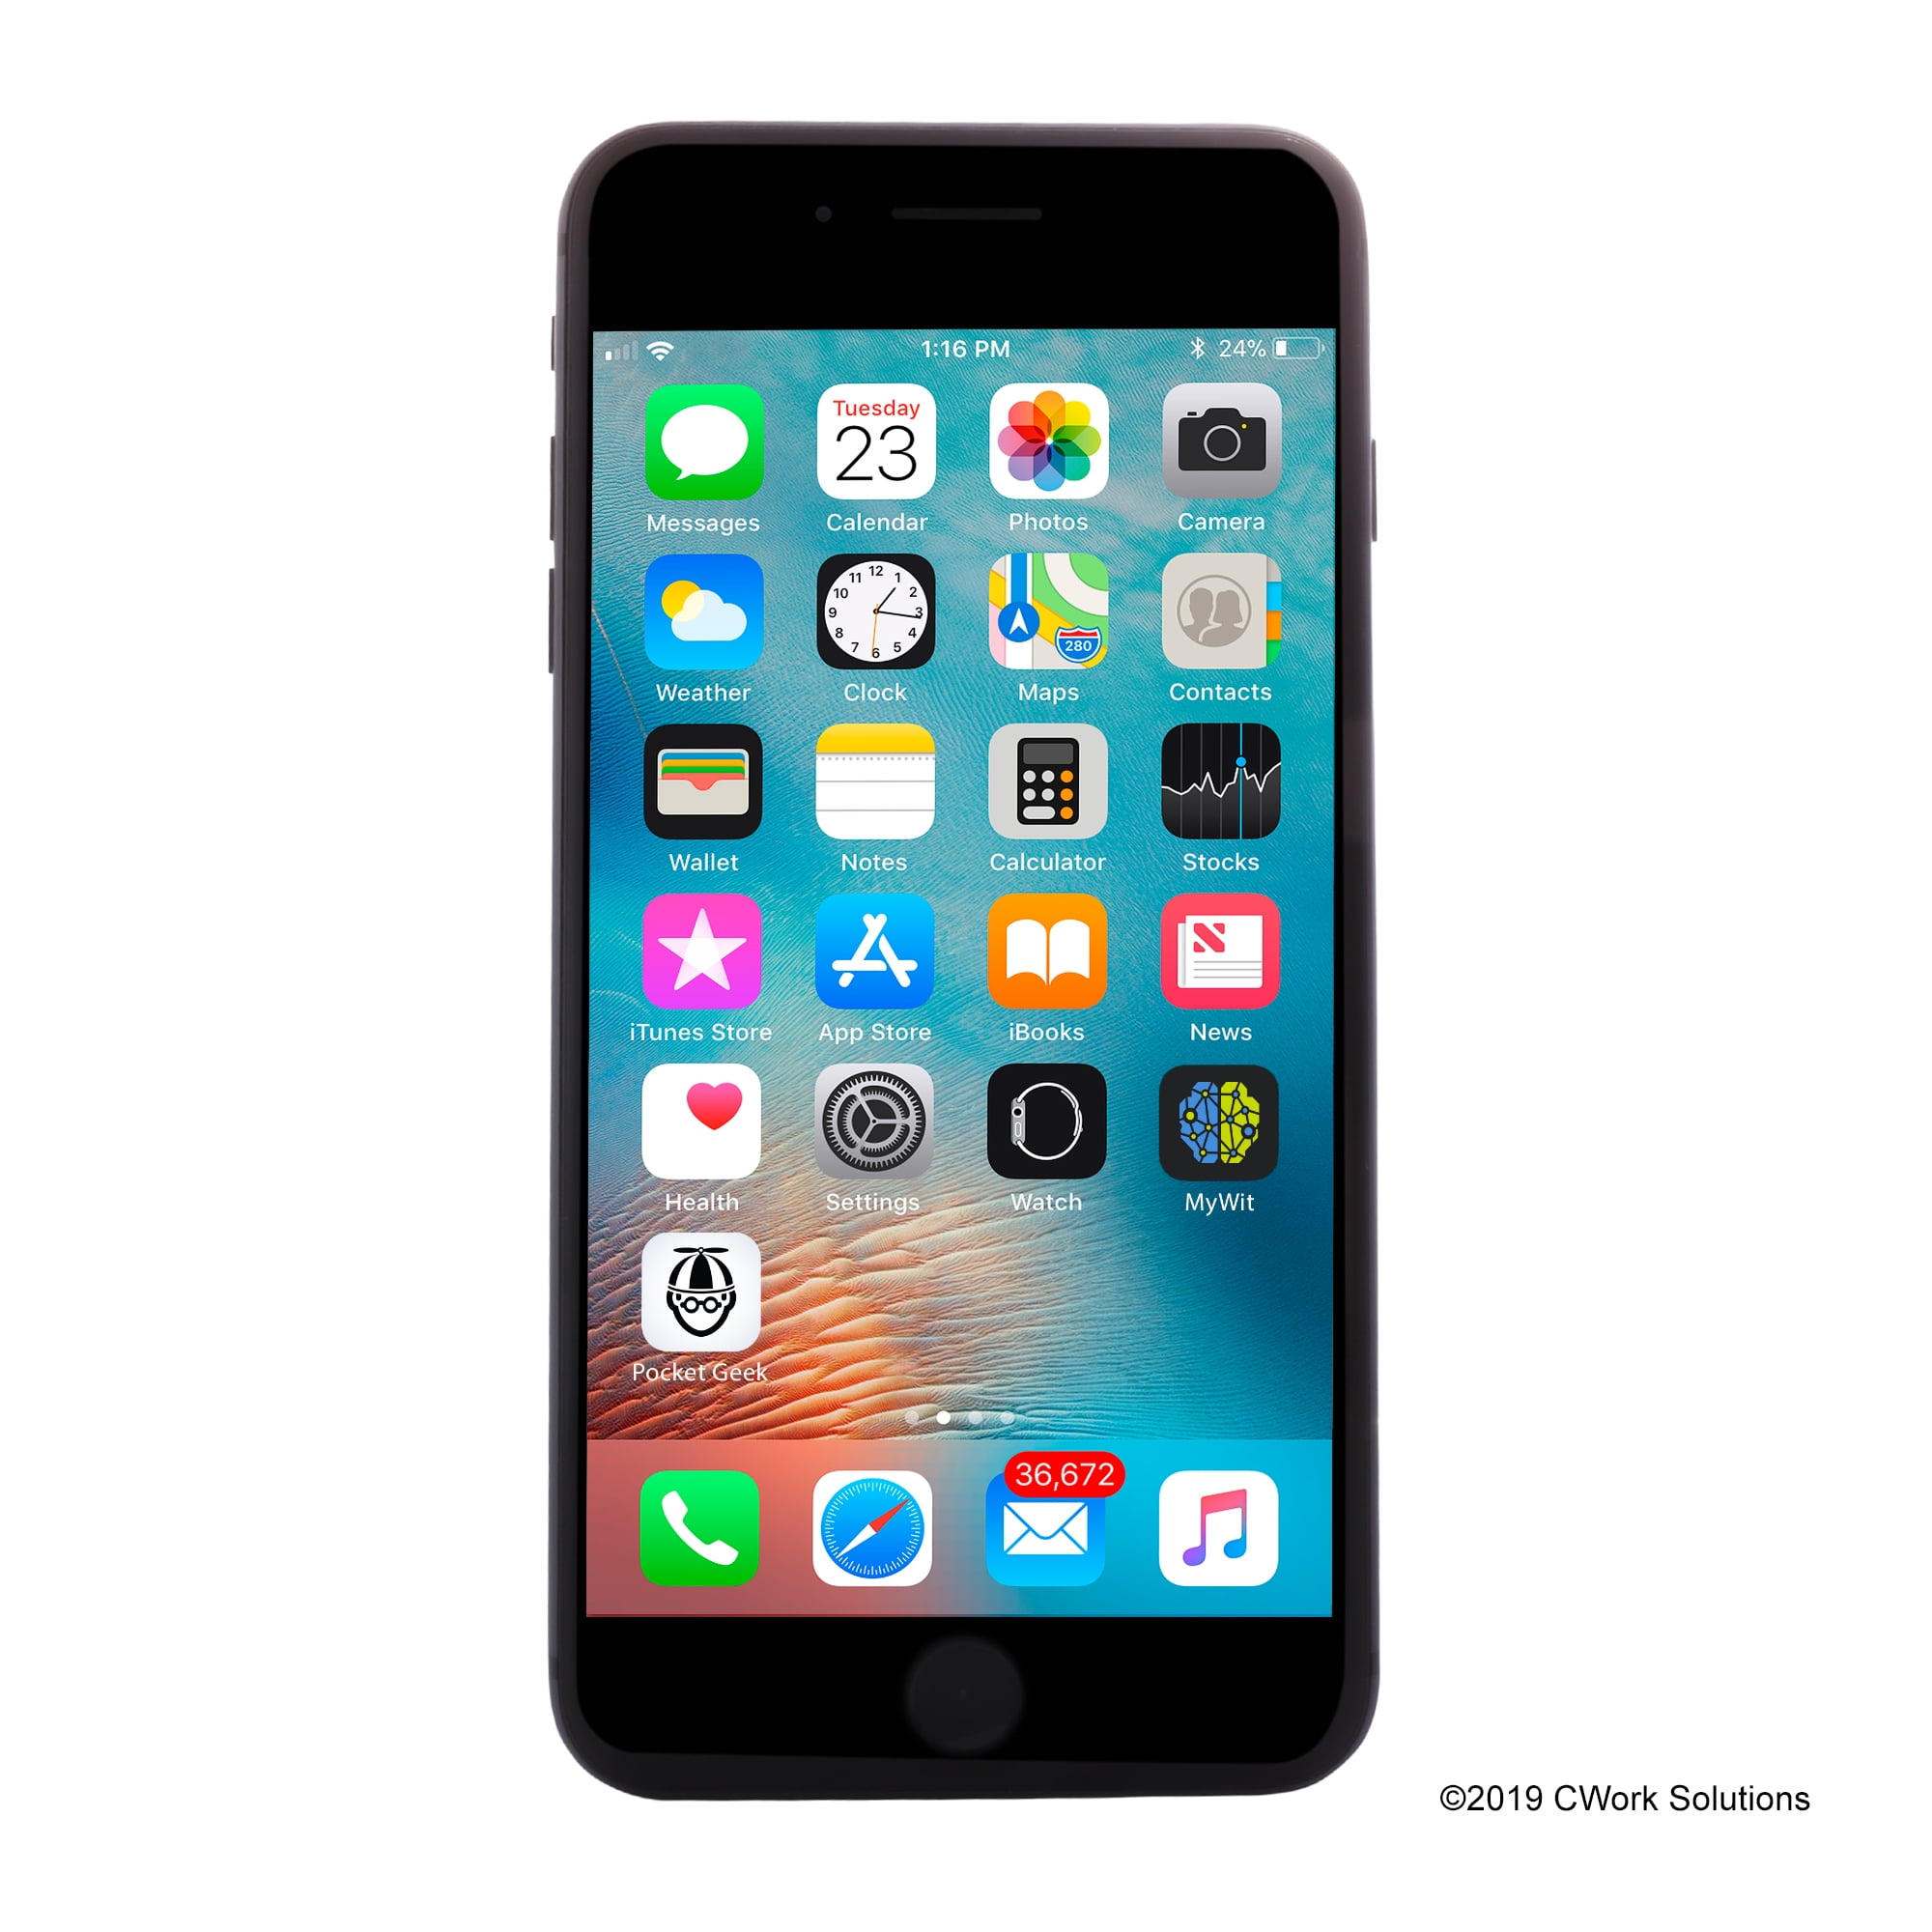 Apple iPhone 8 Plus, 256GB, Space Gray - For Verizon (Renewed 